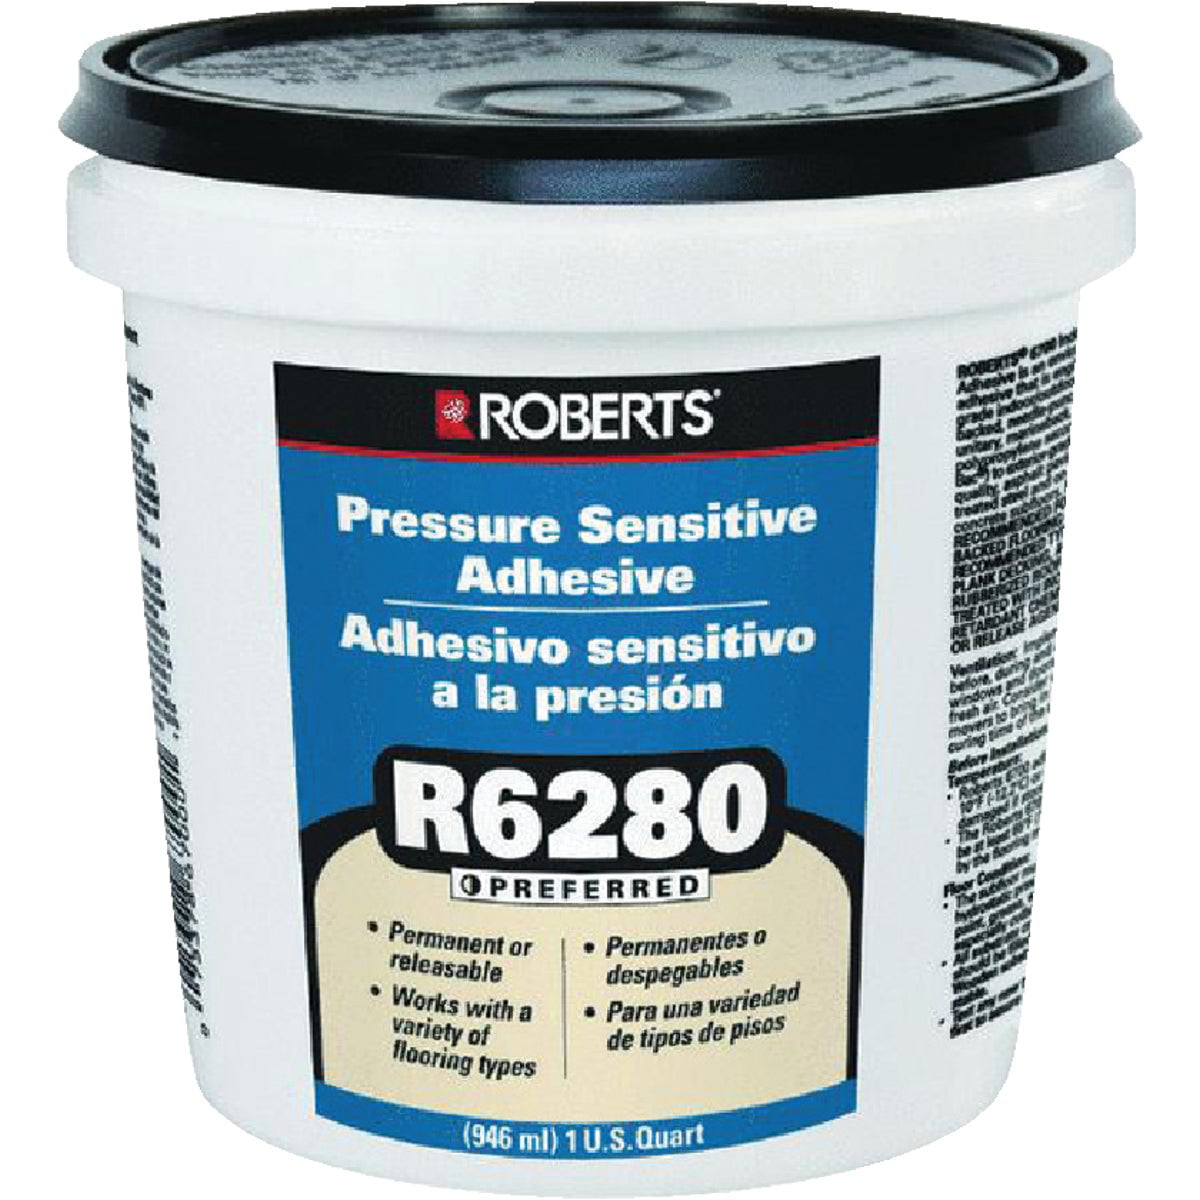 Qep Co Inc Roberts Pressure Sensitive Multi-Purpose Floor Adhesive,No R6280-0